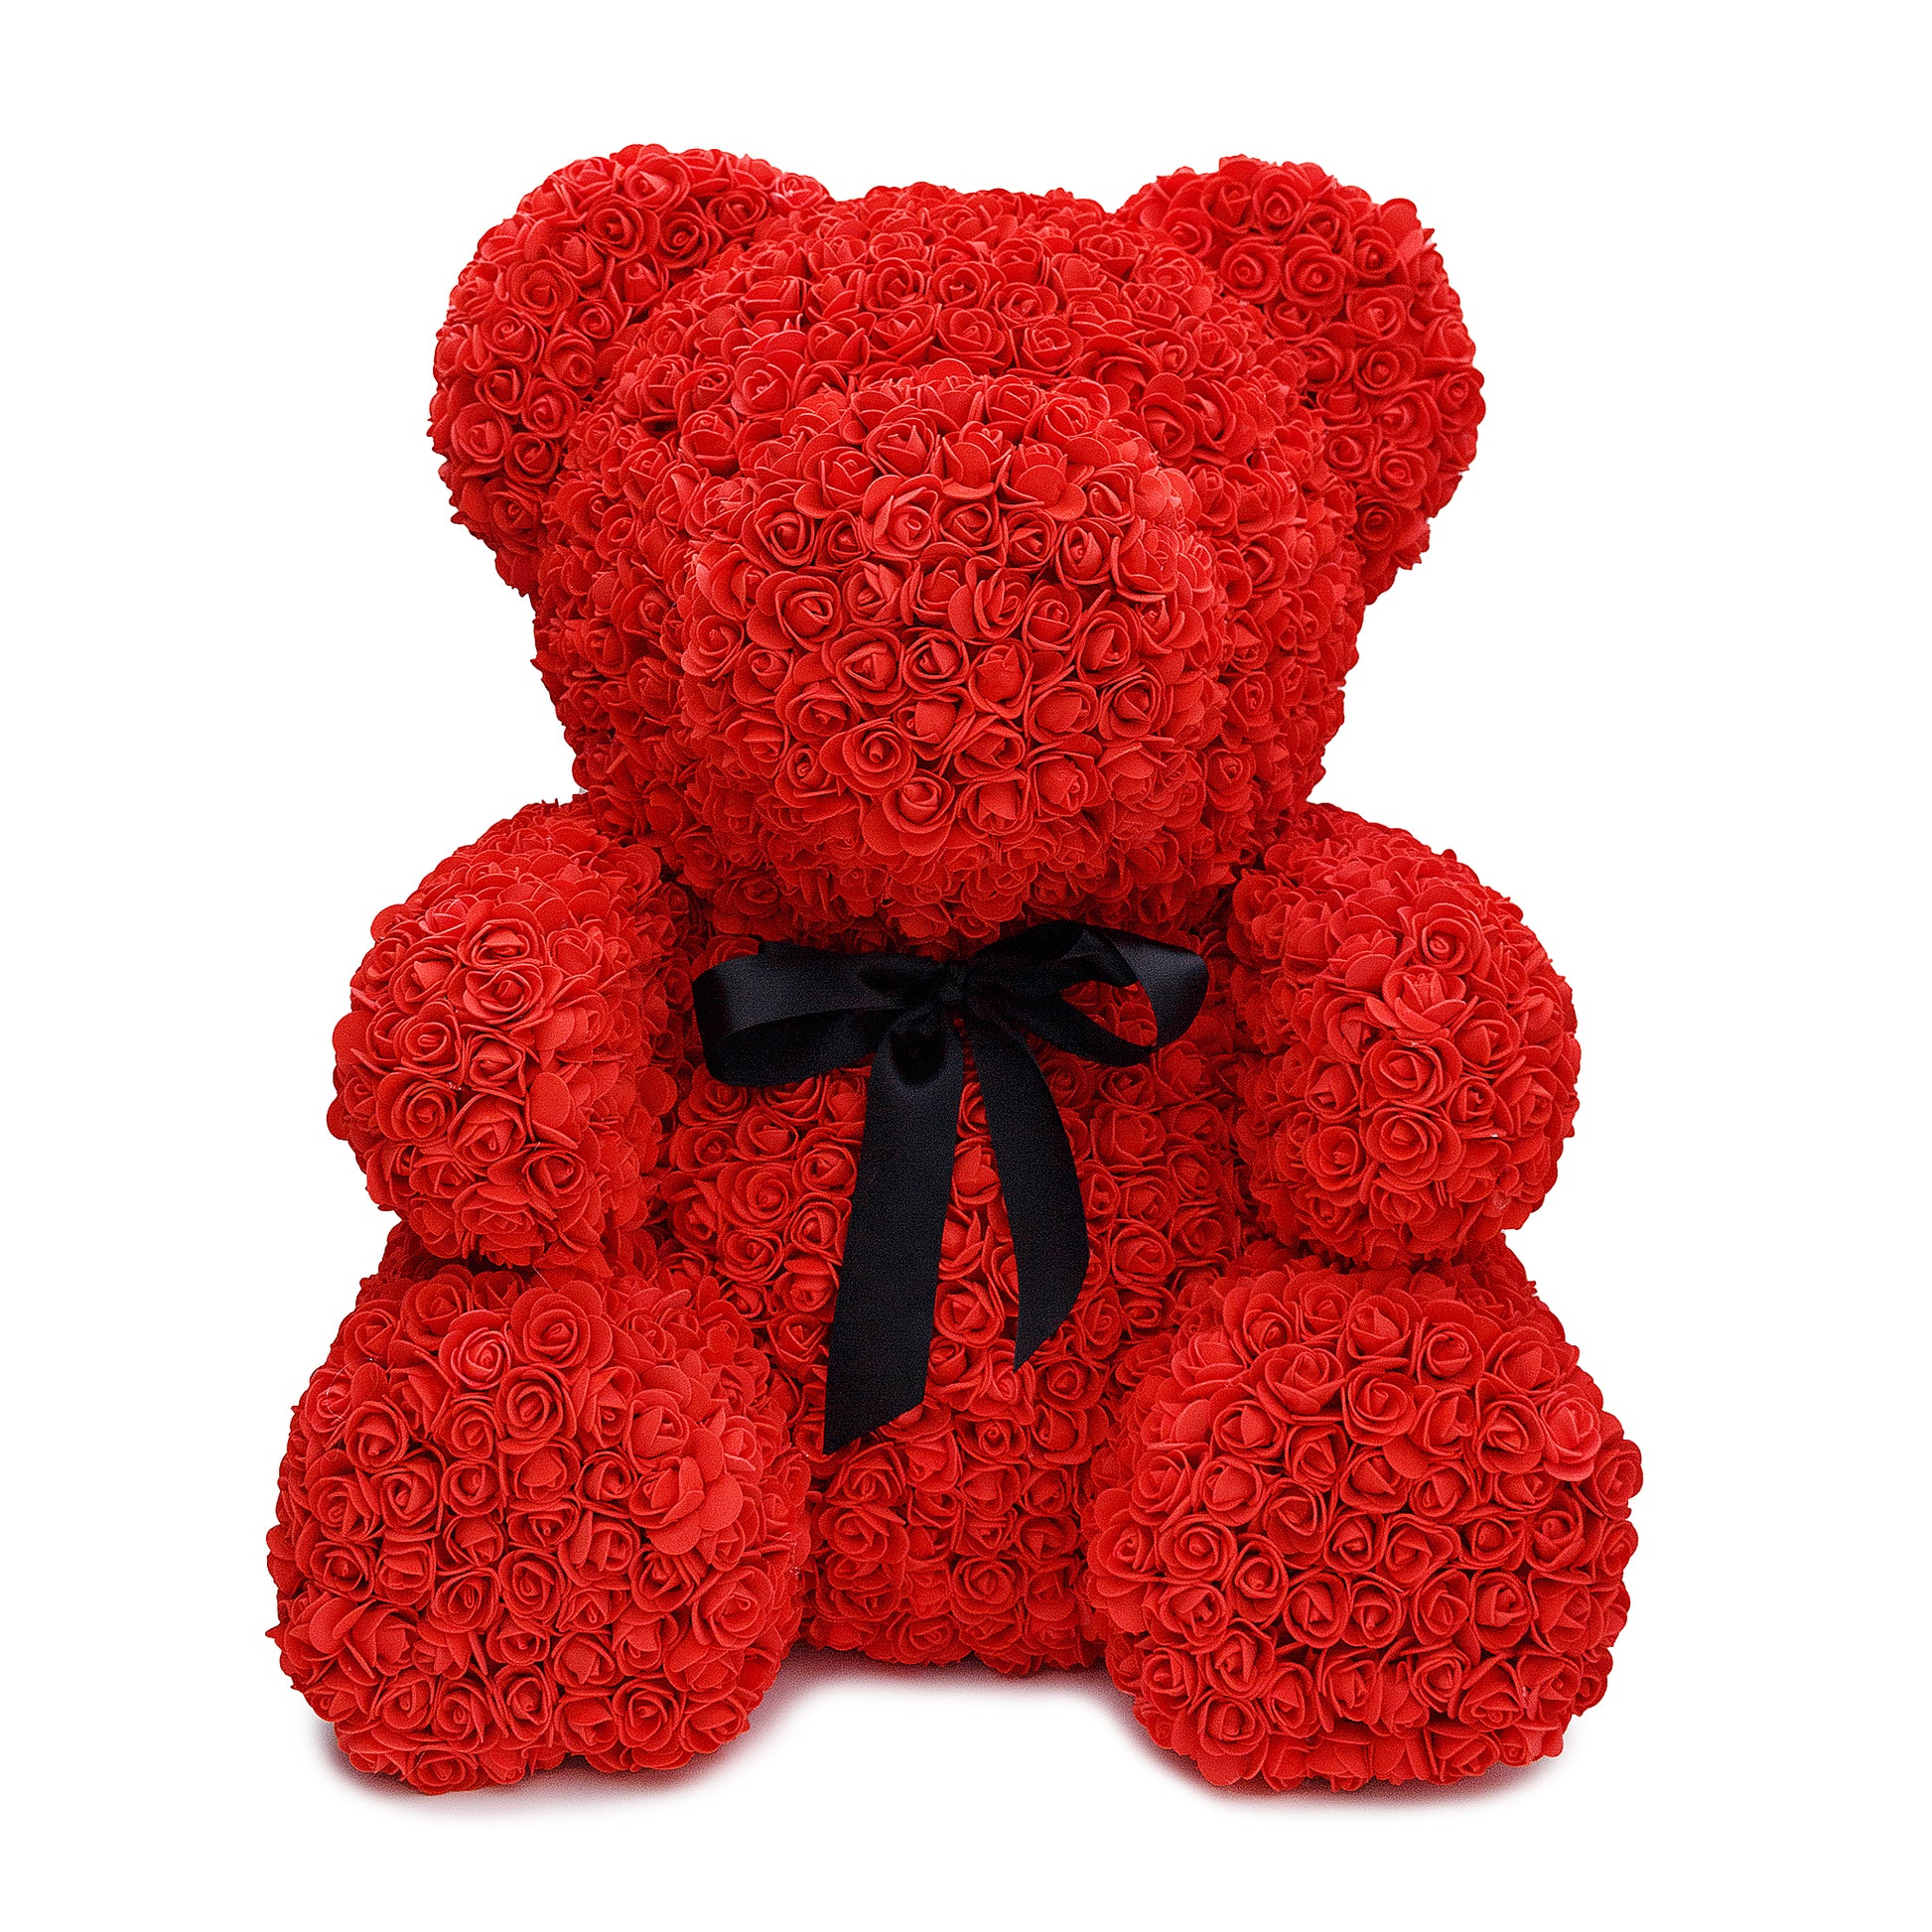 BIG Red Luxury Handmade Rose Teddy Bear -1